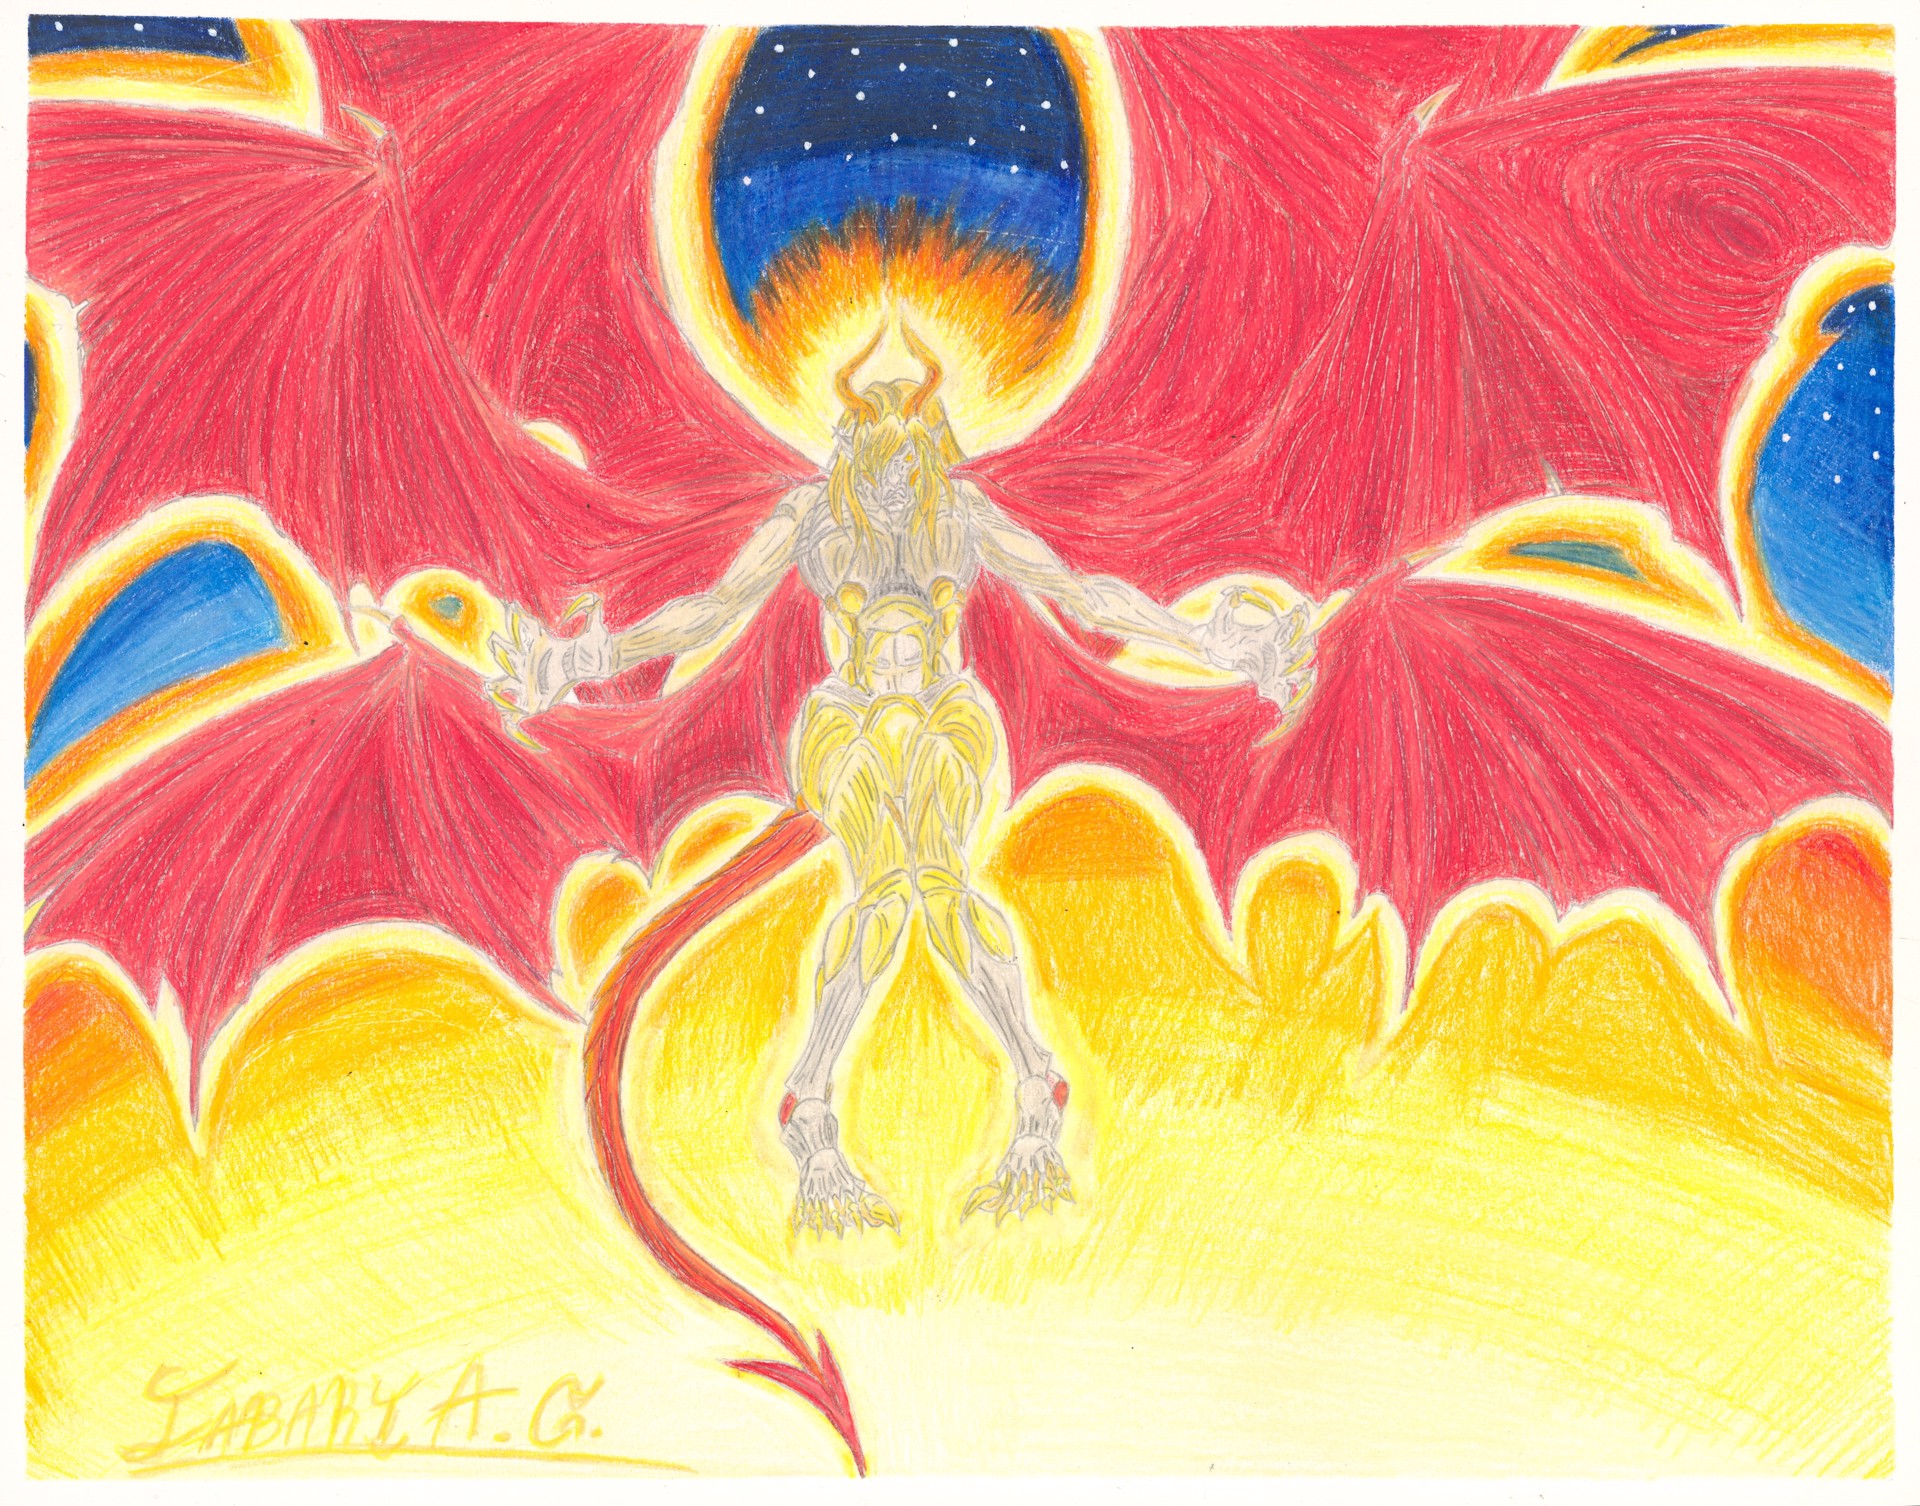 Holy Lucifer by Jabari Cooper